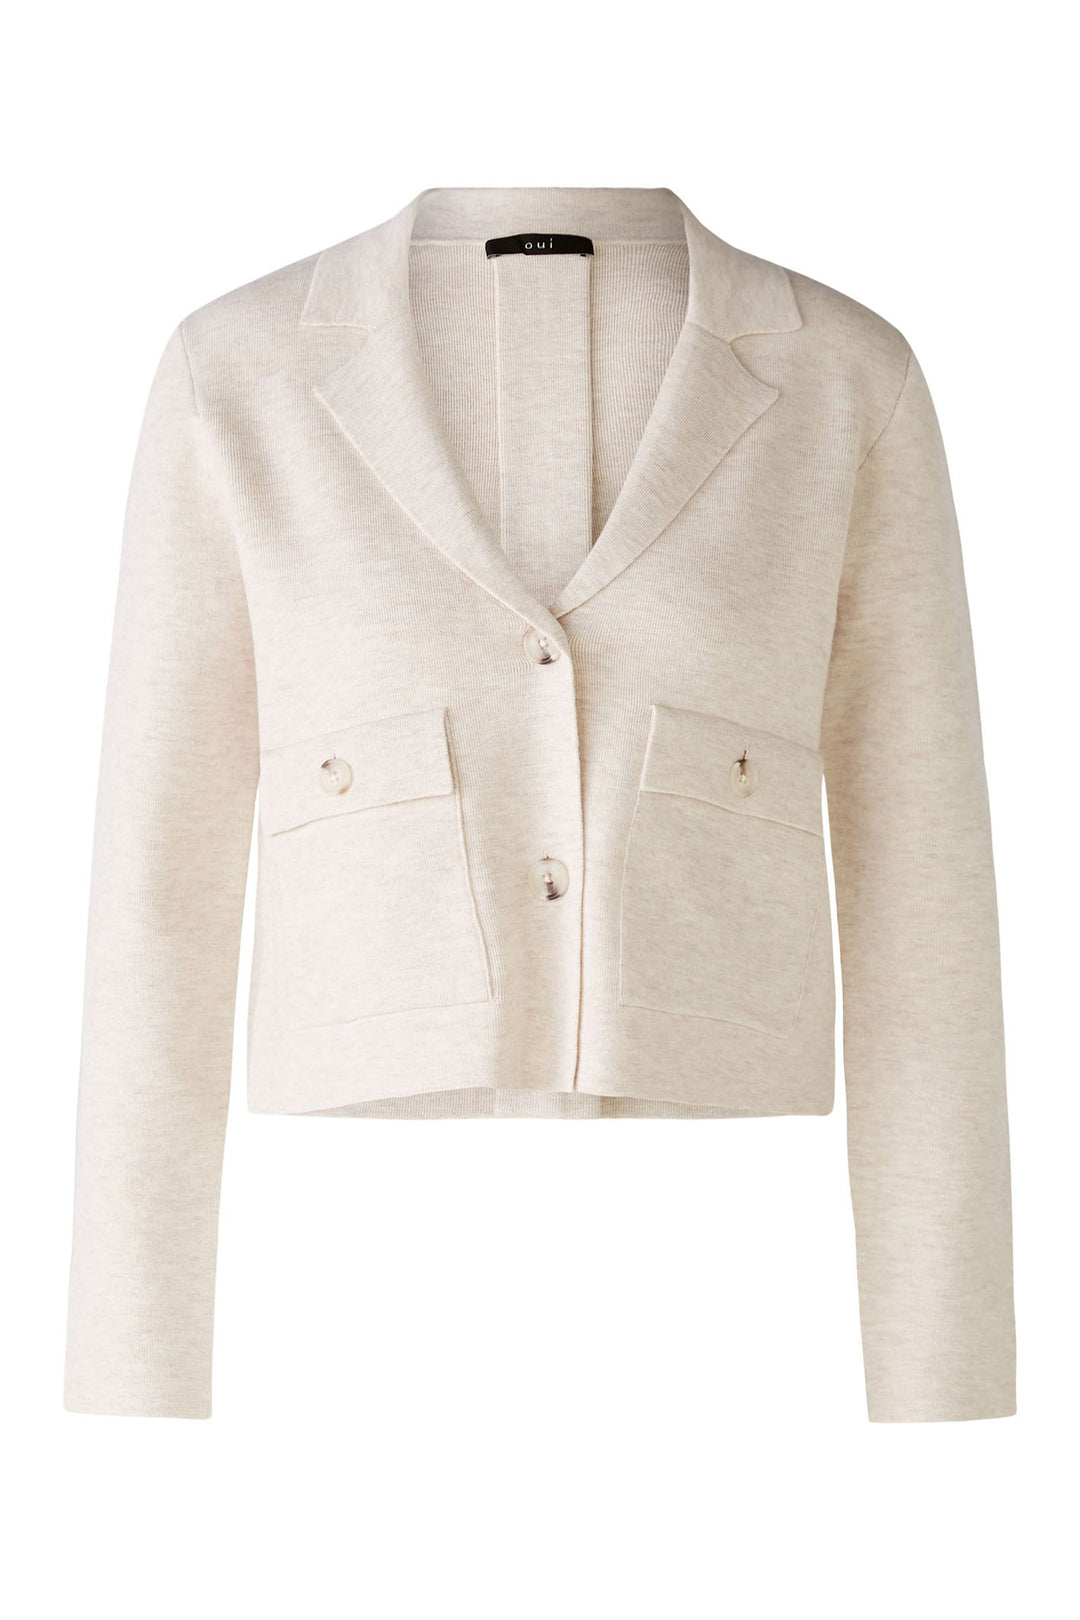 Oui 86688 Light Beige Melange Two Button Knitted Cropped Jacket - Olivia Grace Fashion